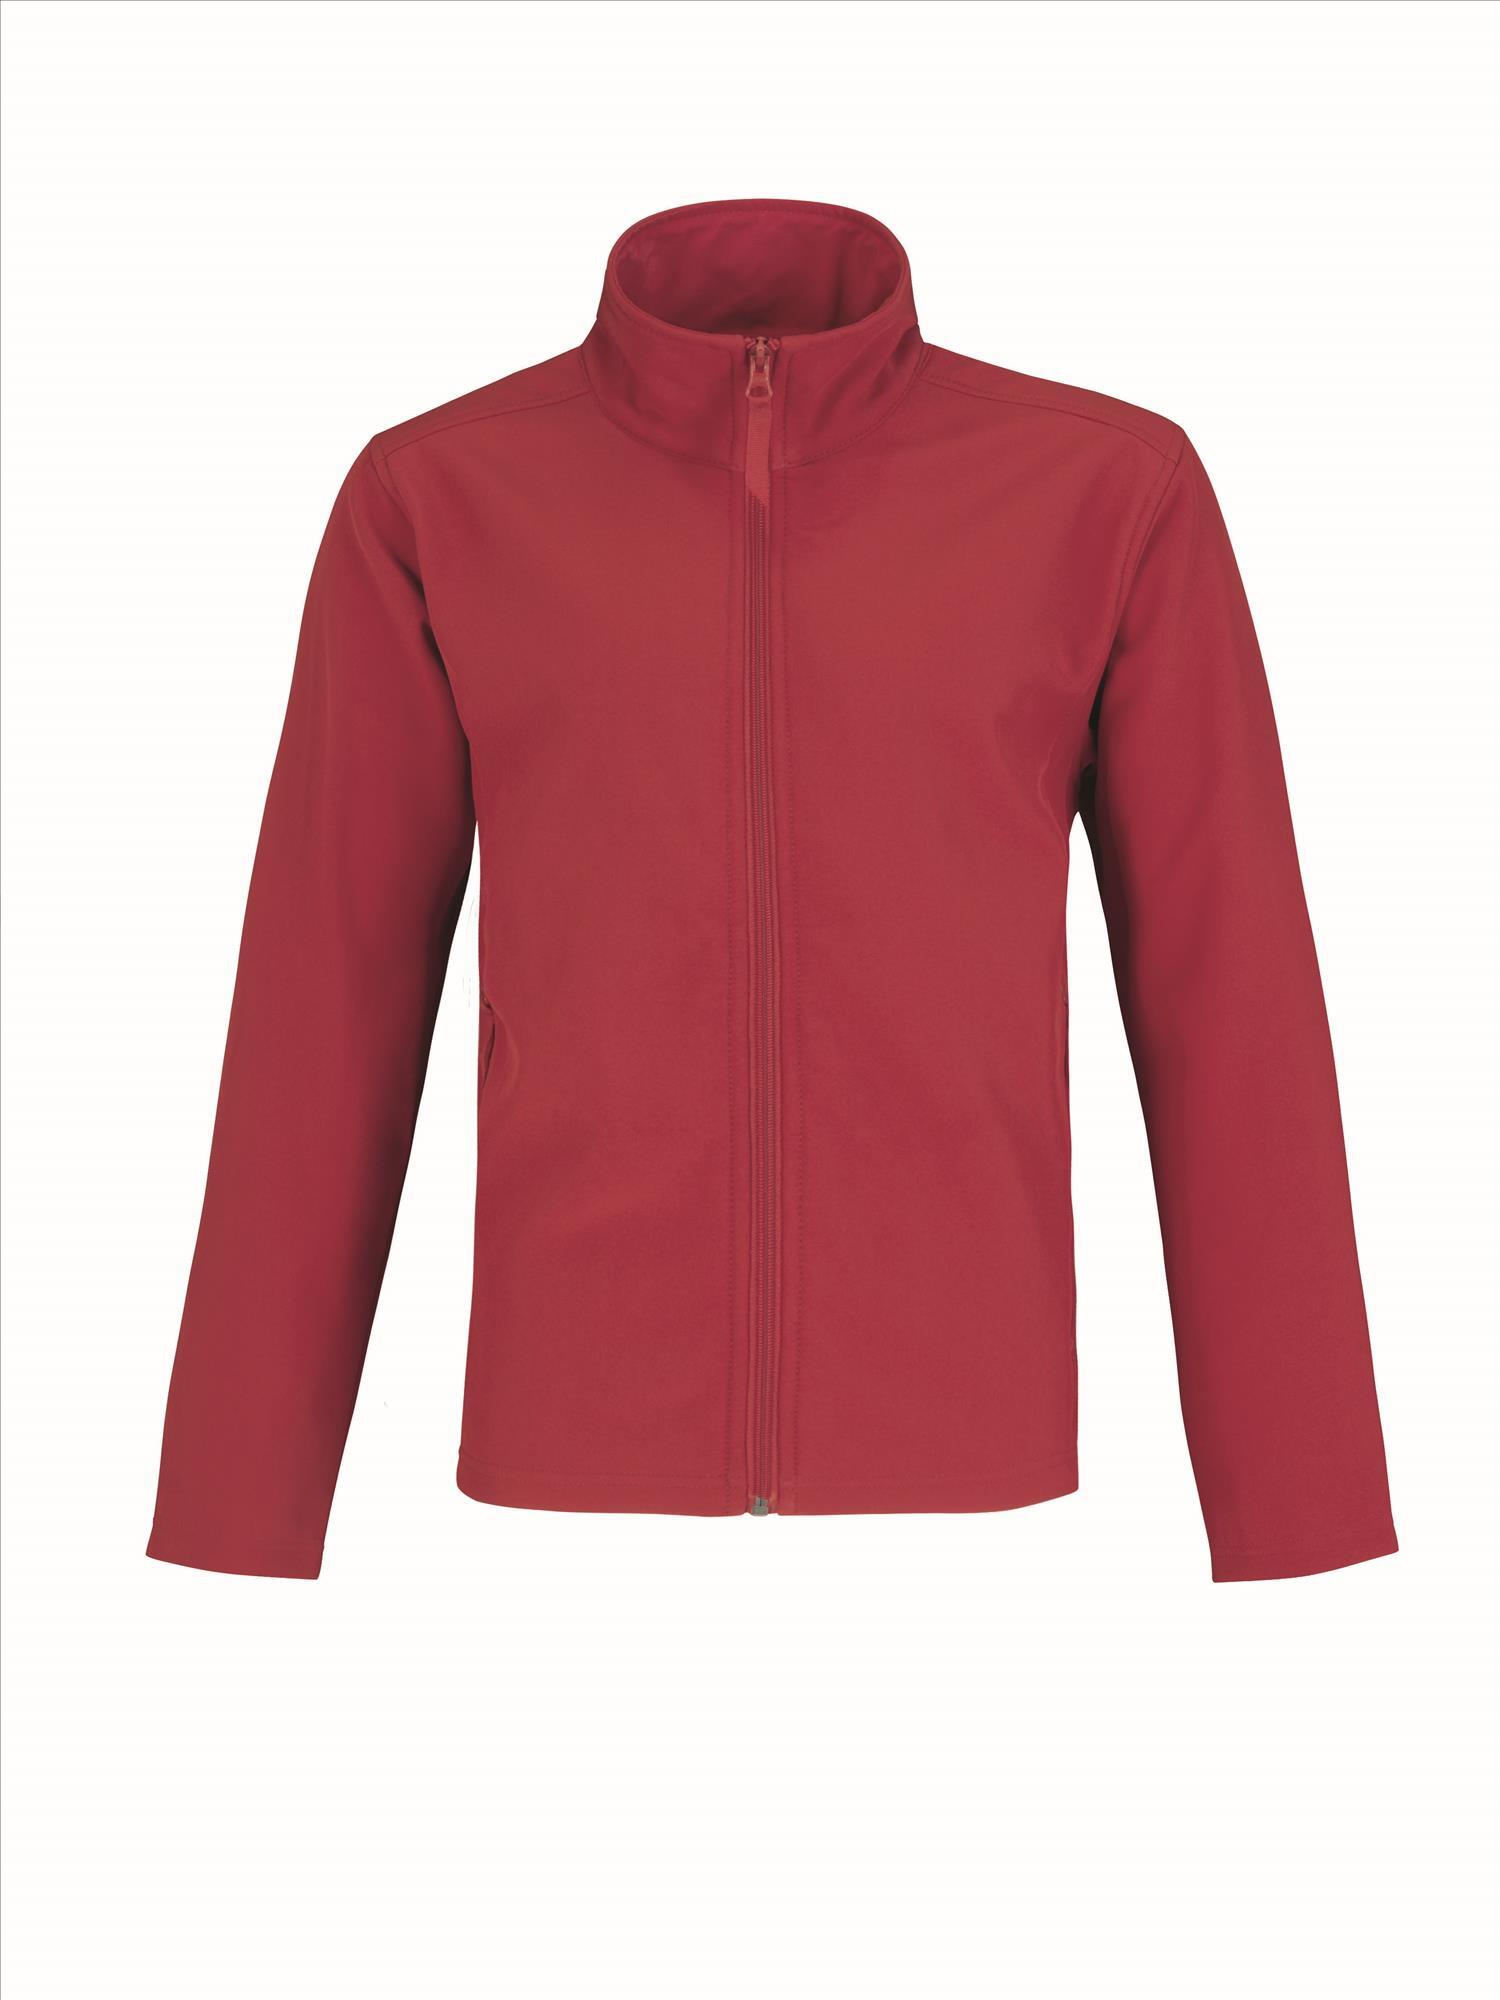 Softshell jas rood voor hem te personaliseren bedrukbaar